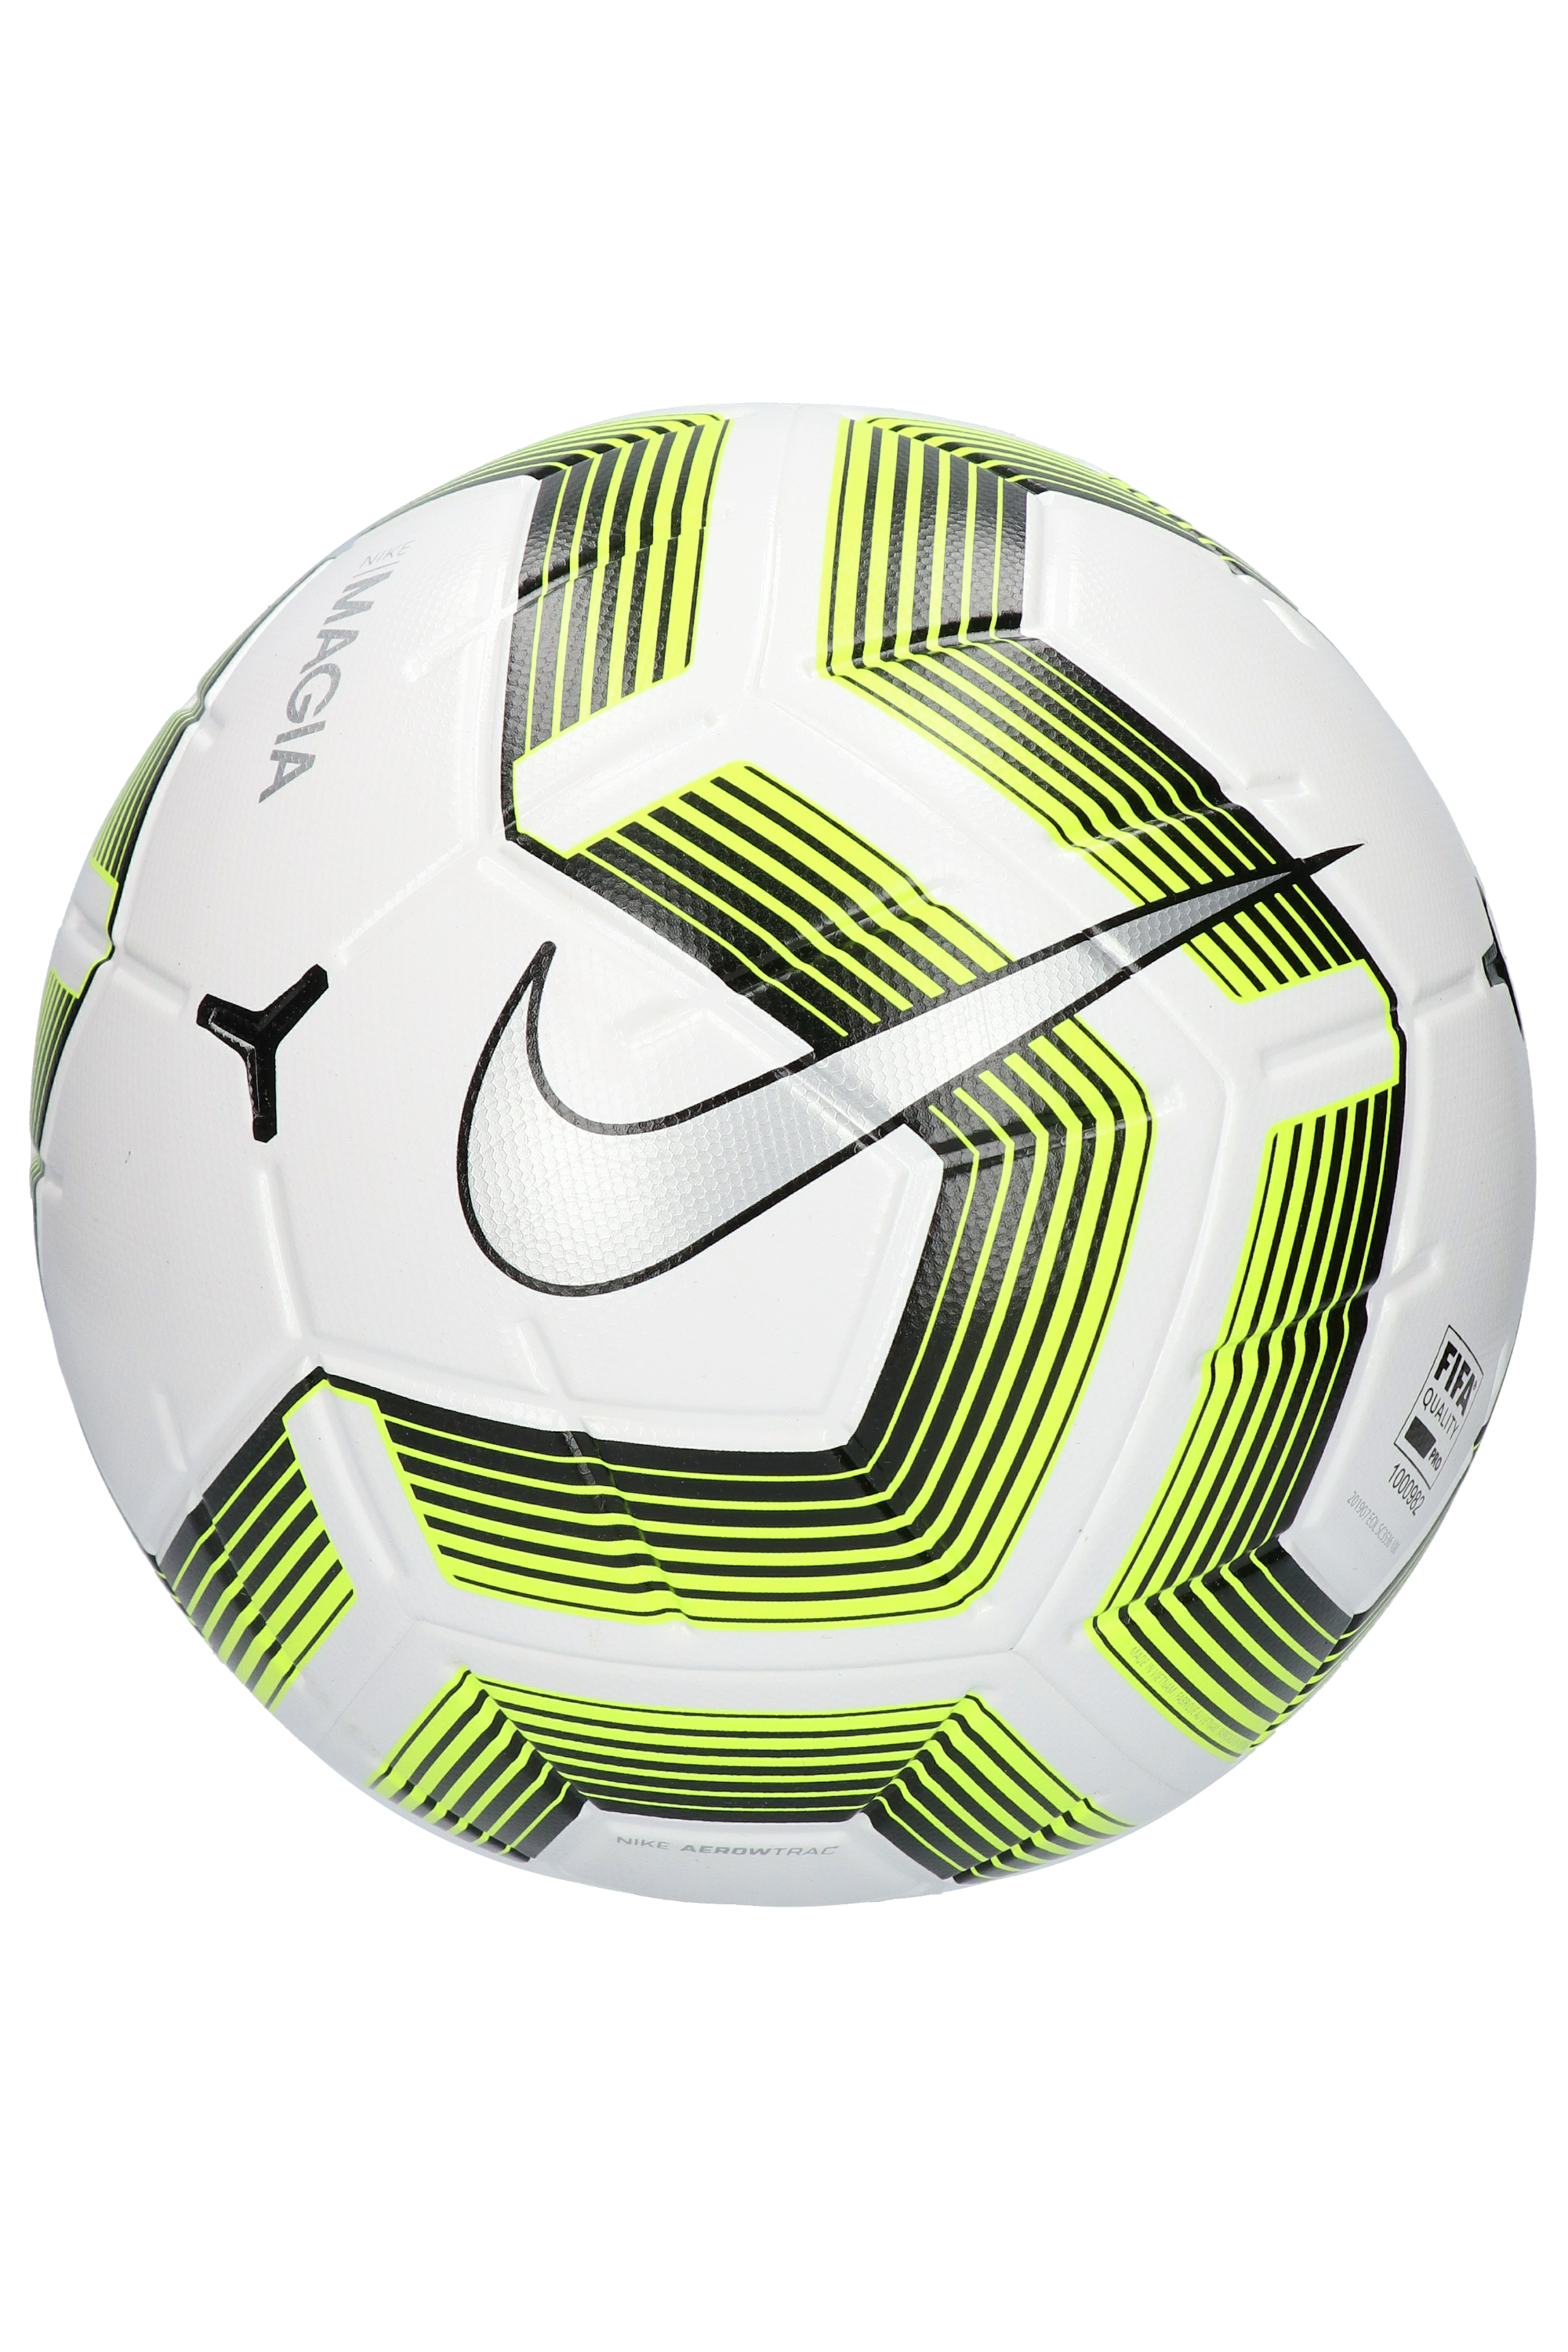 Ball Team Fifa Magia size 5 | R-GOL.com - Football boots \u0026 equipment